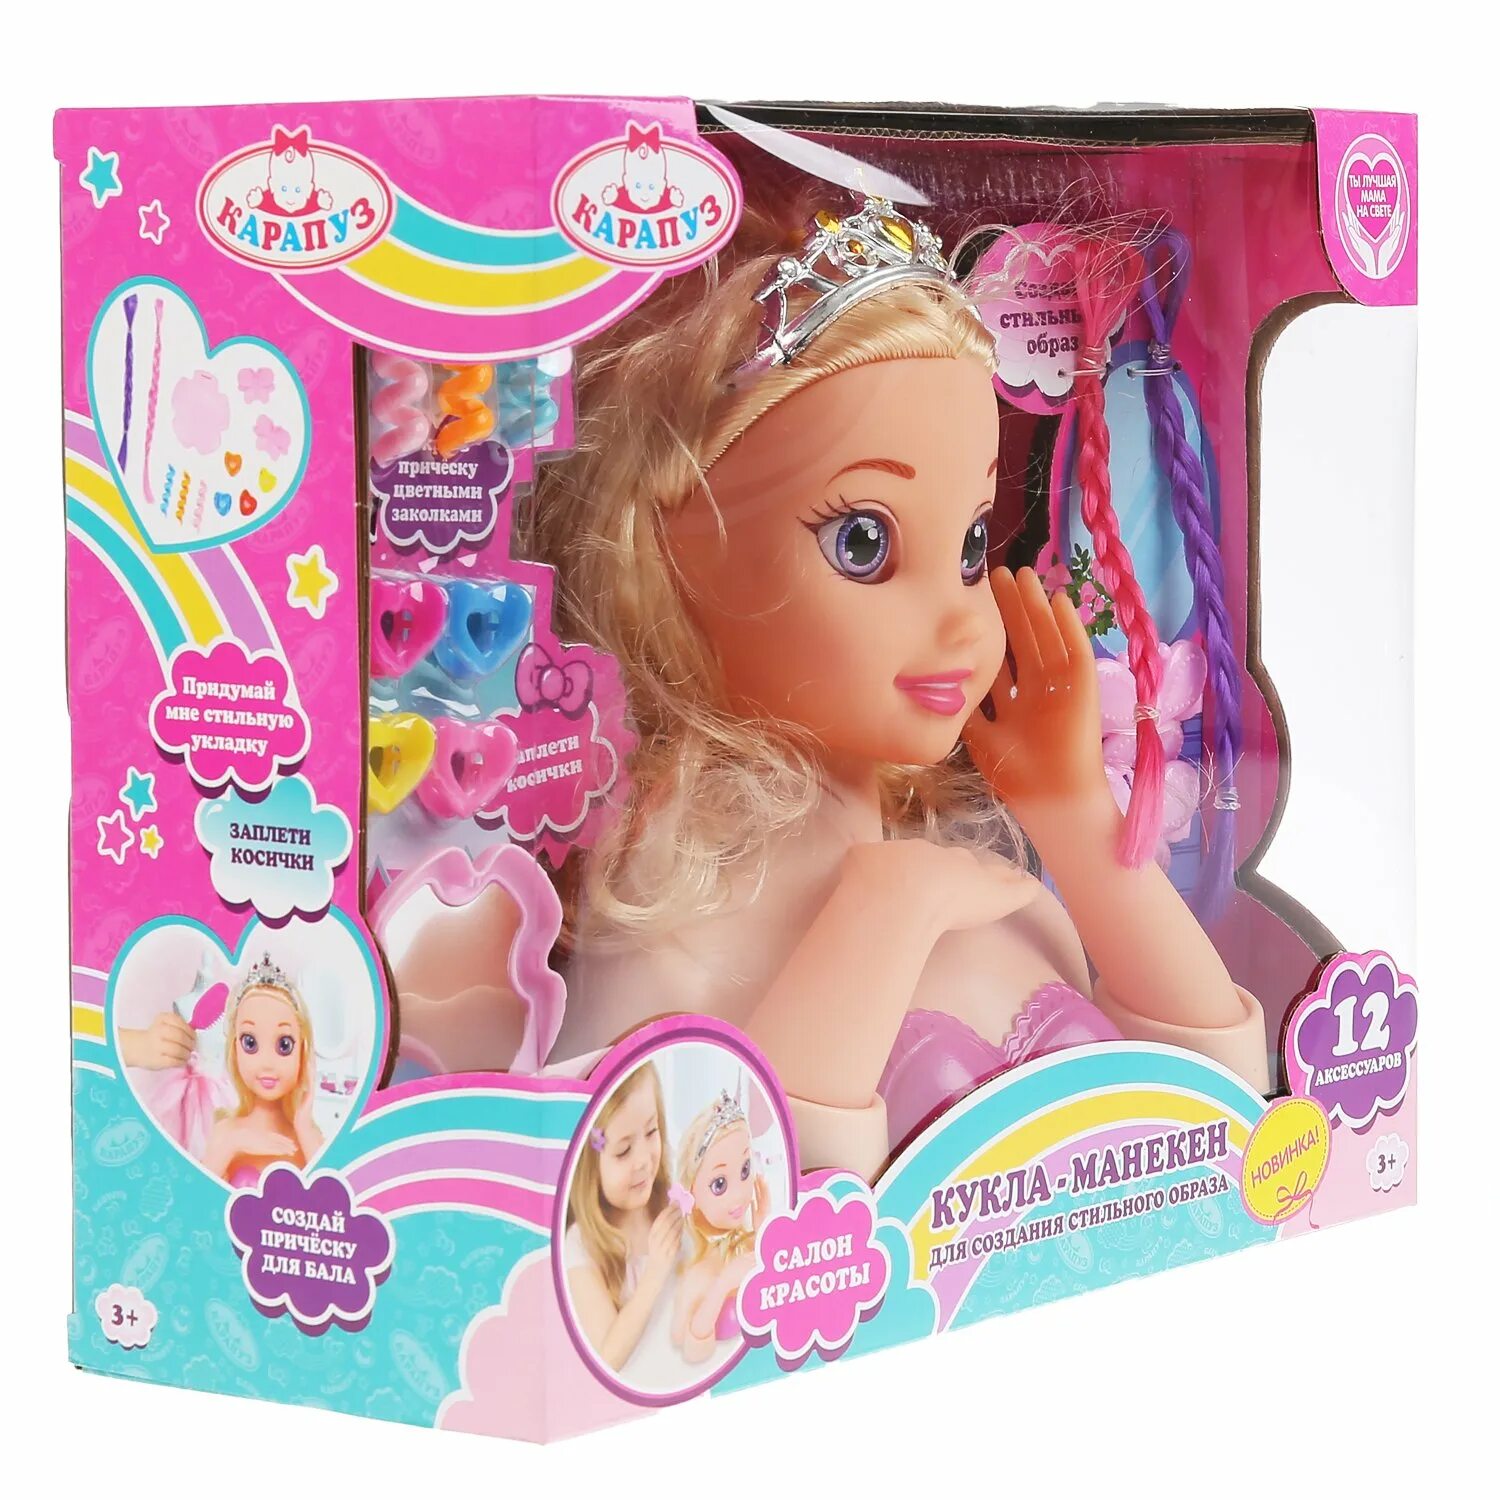 Кукла прически купить. ТМ Карапуз кукла-манекен. Кукла манекен Карапуз. Принцесса голова-манекен Карапуз. Кукла-манекен Карапуз, b1575878-1-ru.